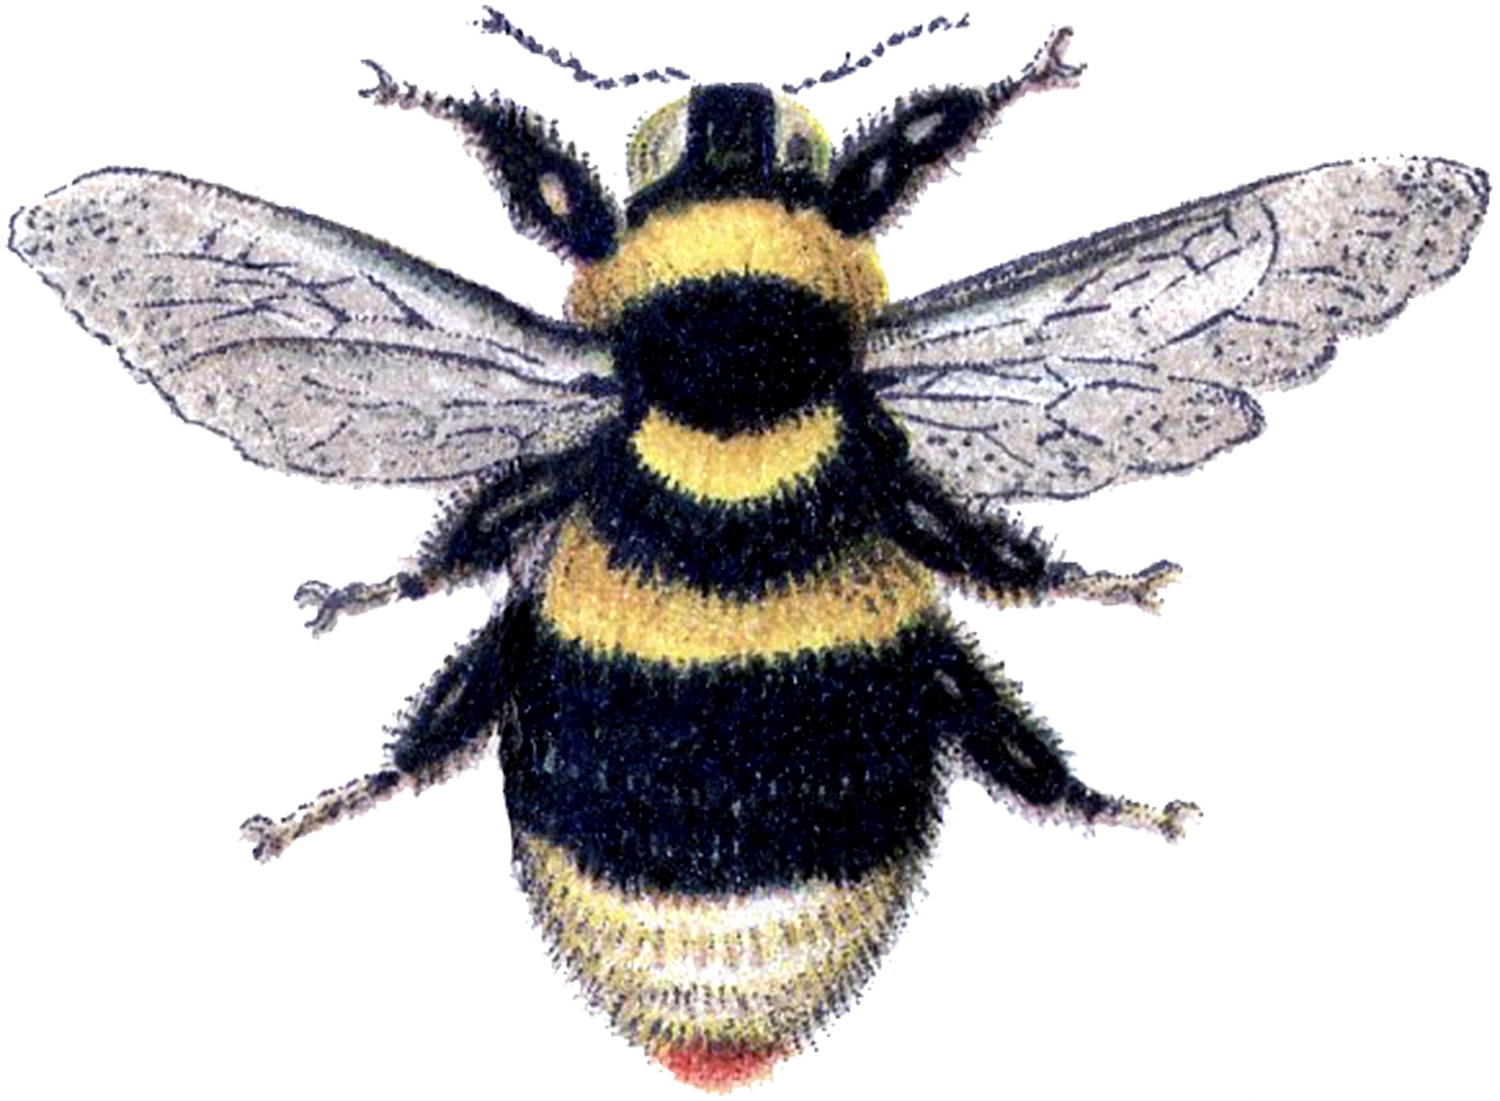 Marvelous Bumblebee Clip Art Image! - The Graphics Fairy